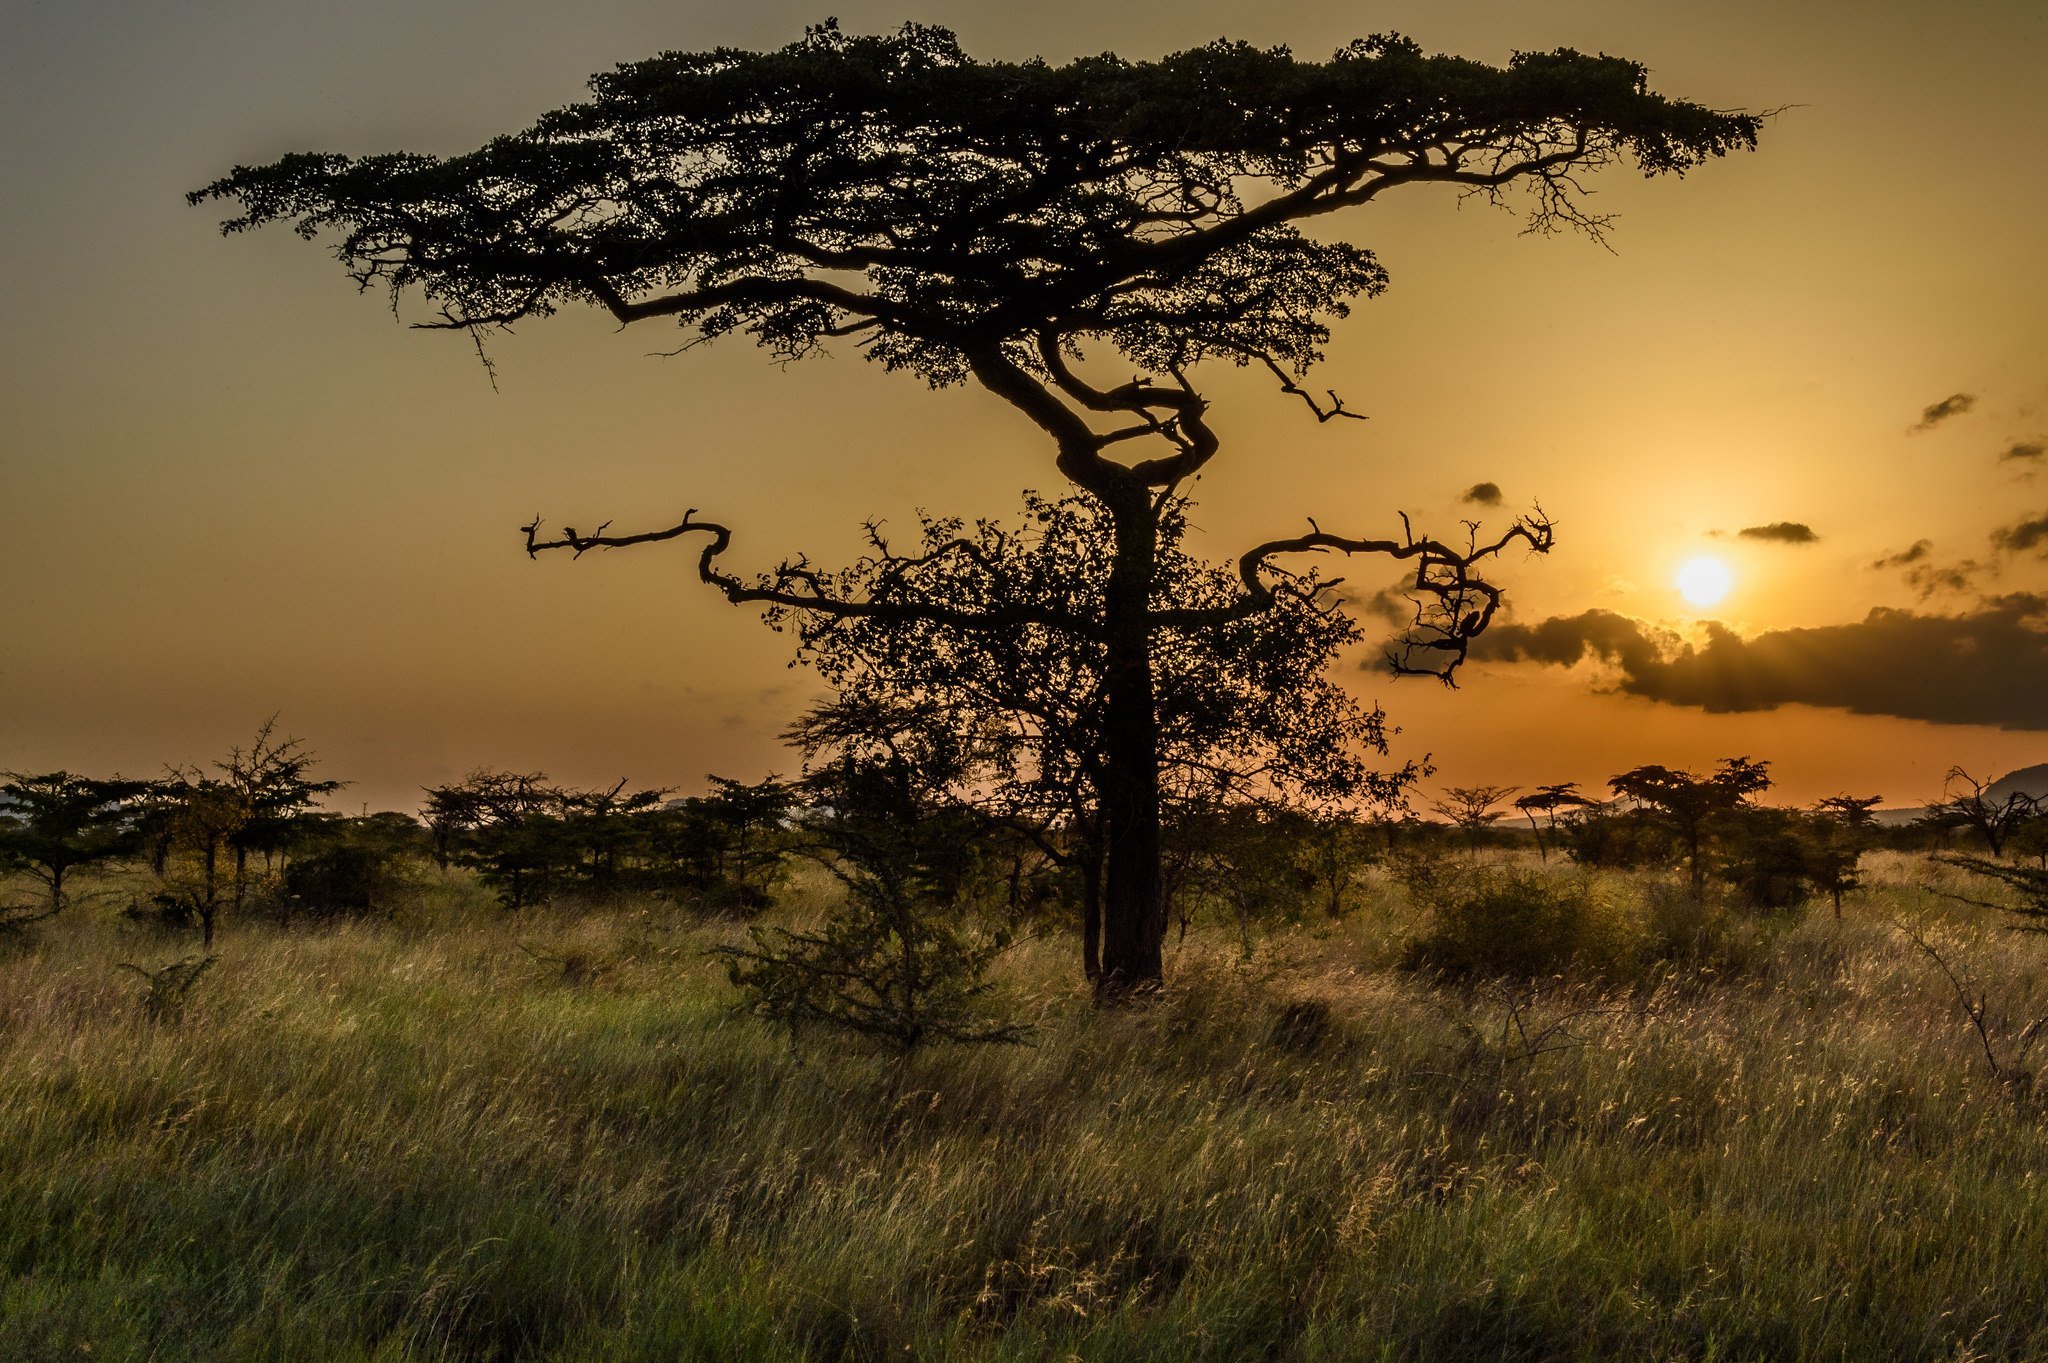 Саванной восточной африки. Кения Саванна. Зимбабве Саванна. Серенгети Танзания дерево львица. Саванны Африки.